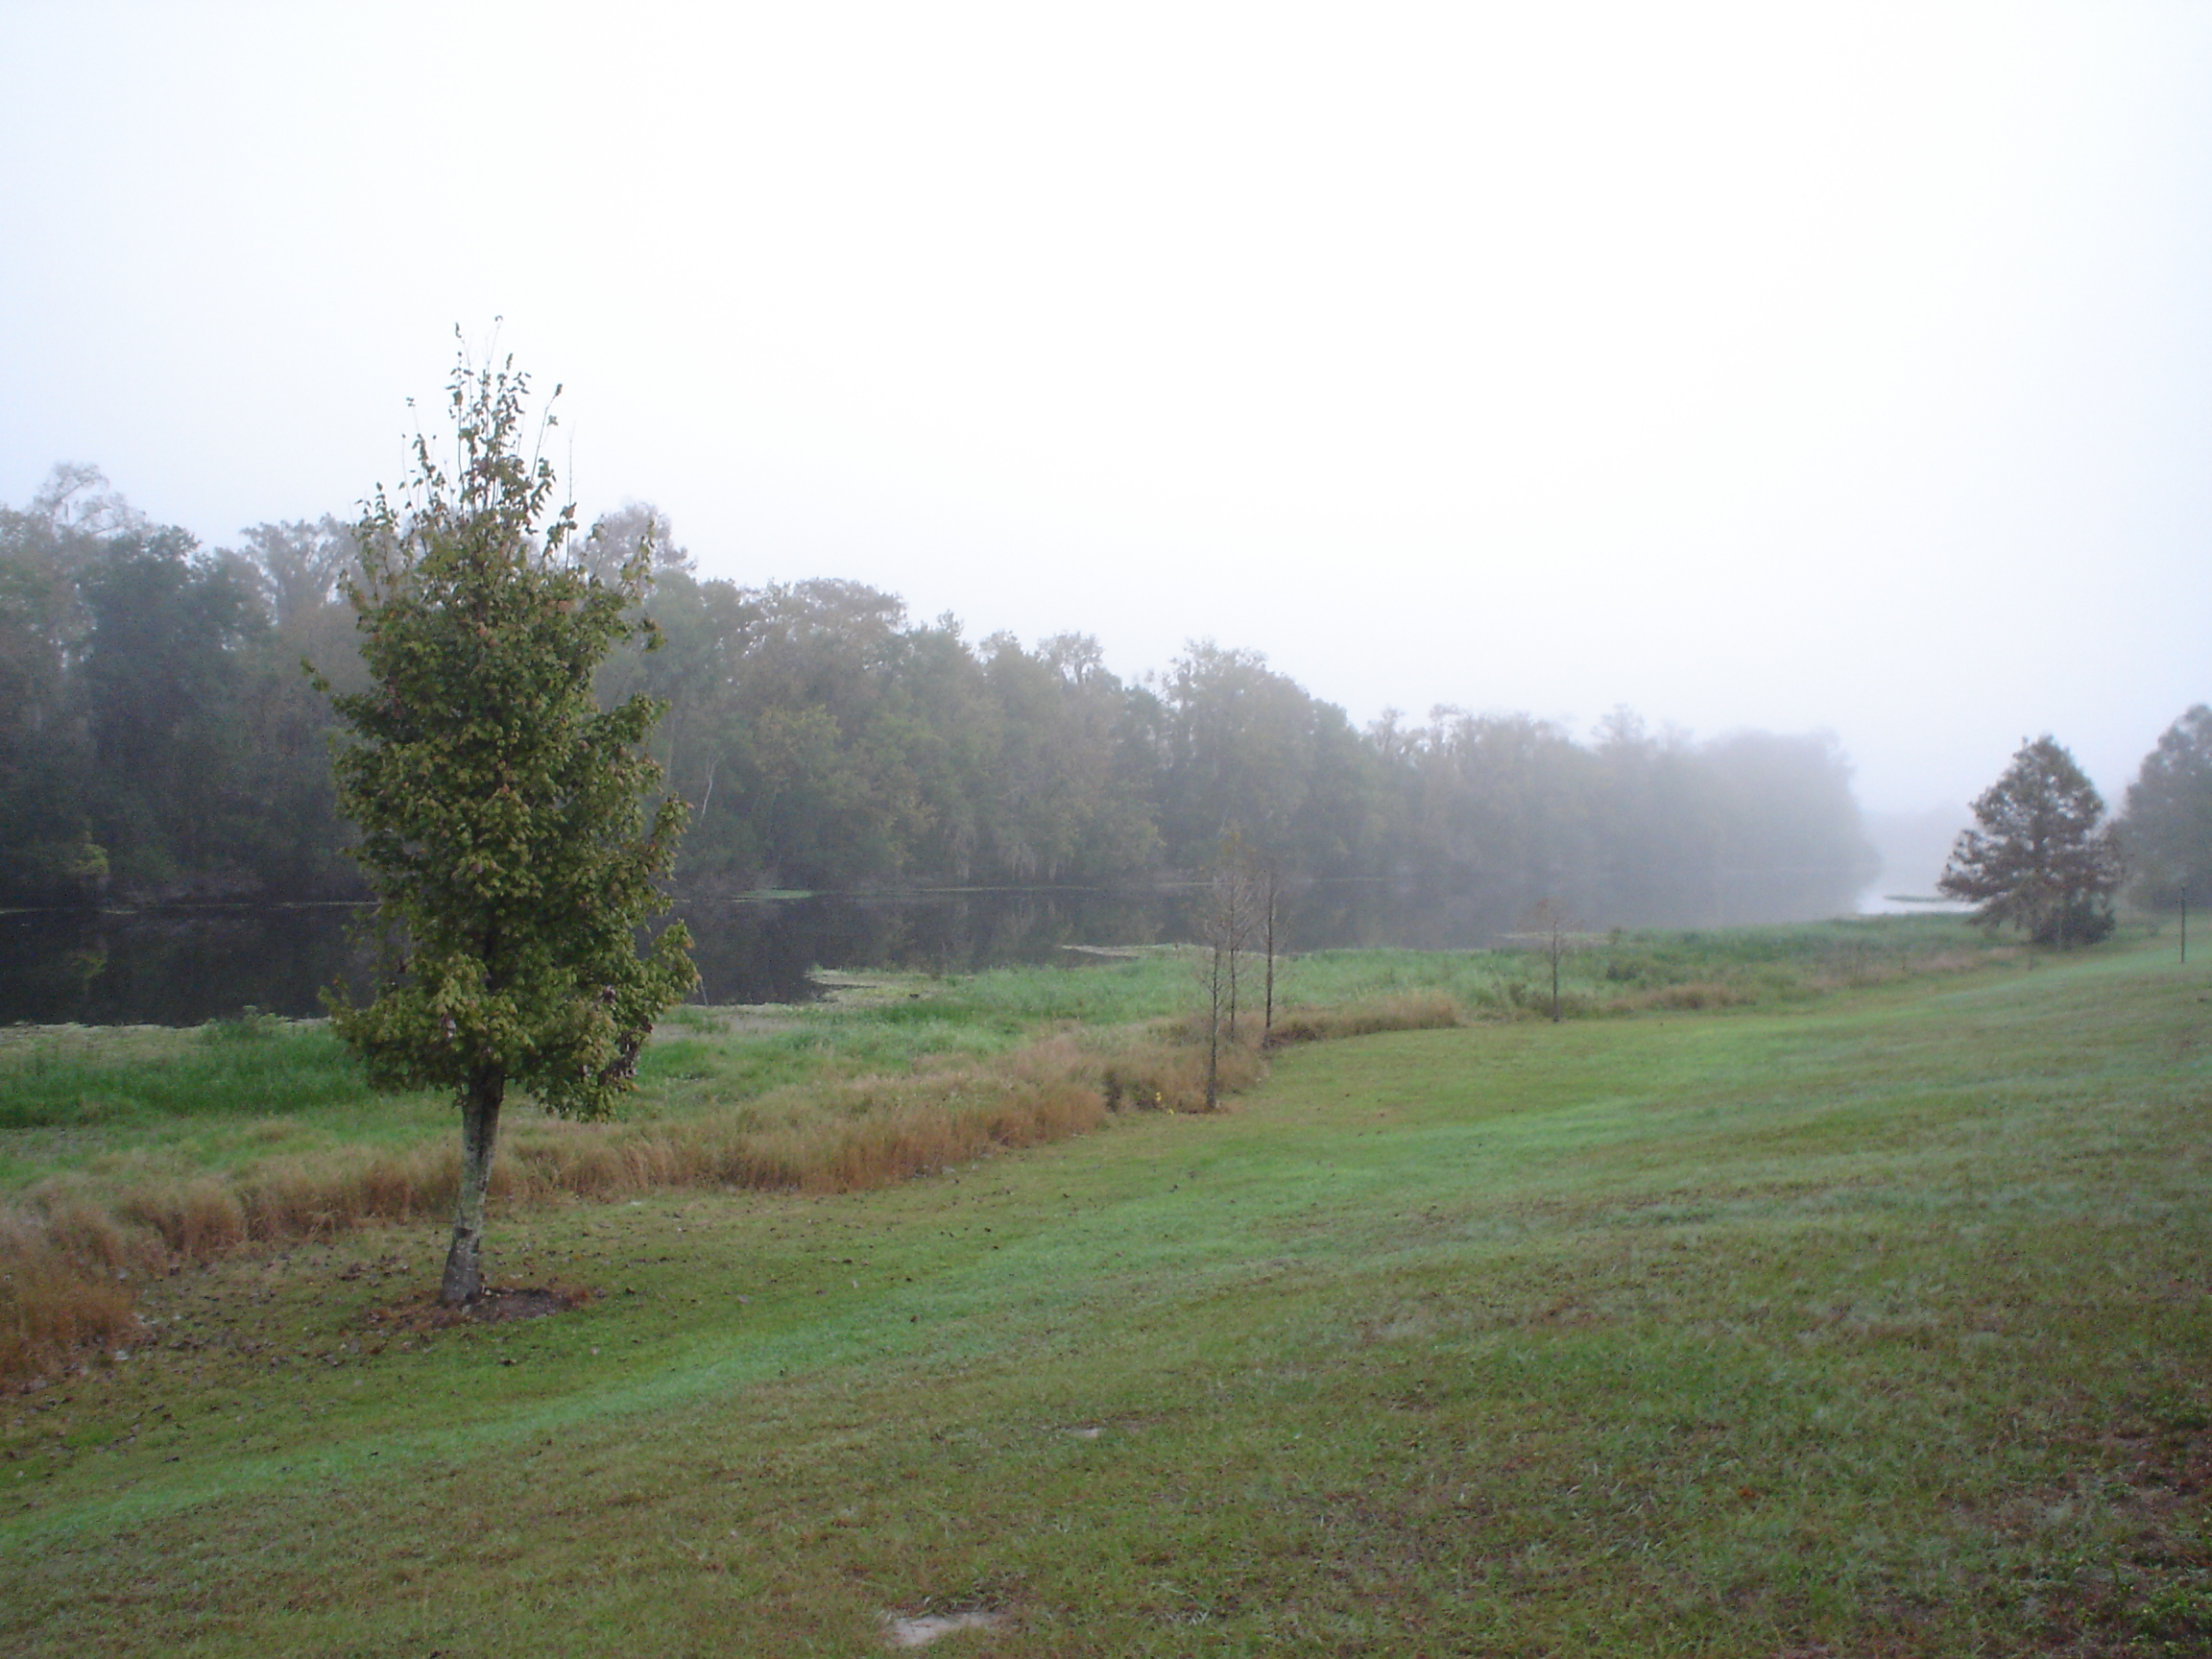 Morning fog photo